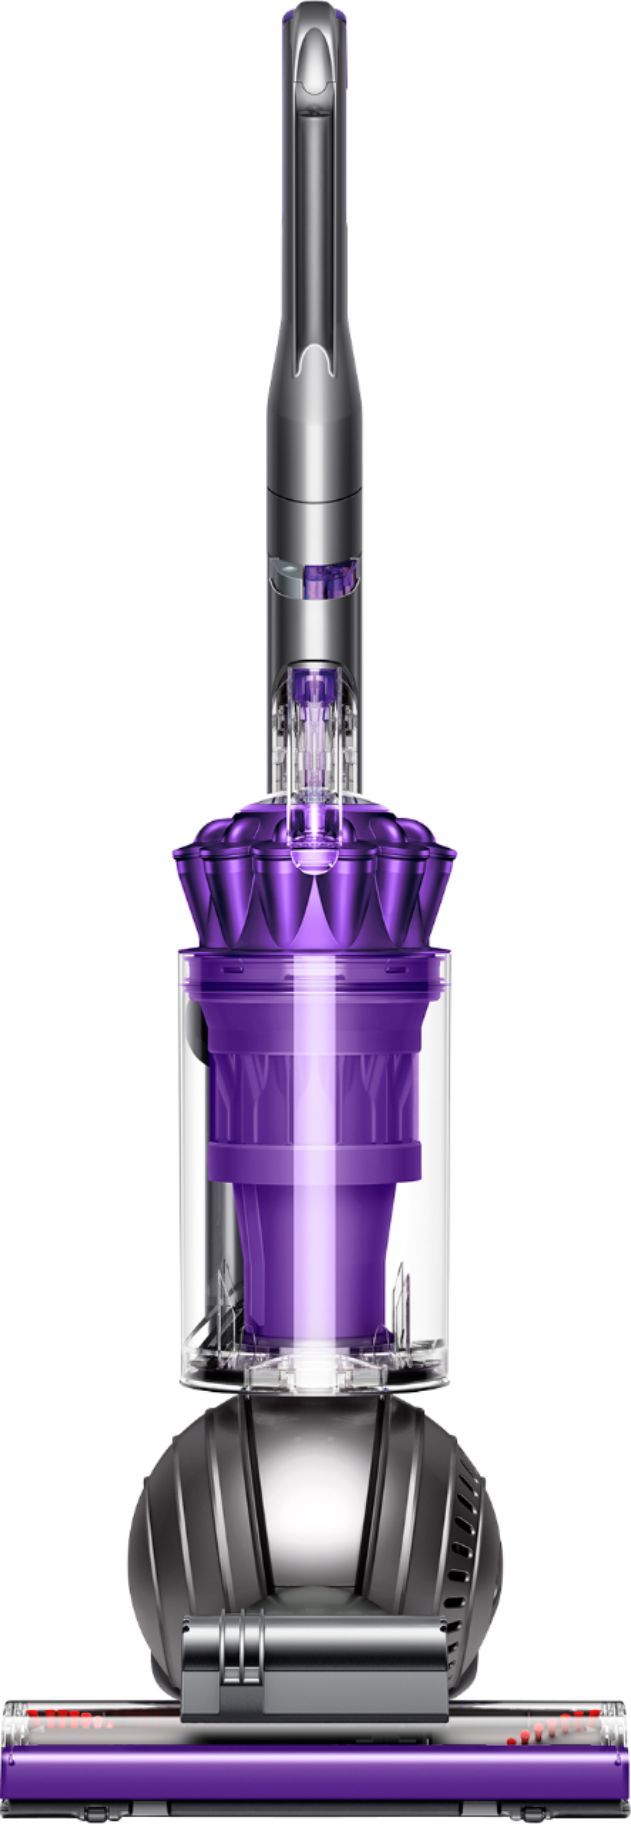 Dyson Ball Animal 2 Upright Vacuum Iron/Purple 227635-01/334176-01 - Best Buy | Best Buy U.S.